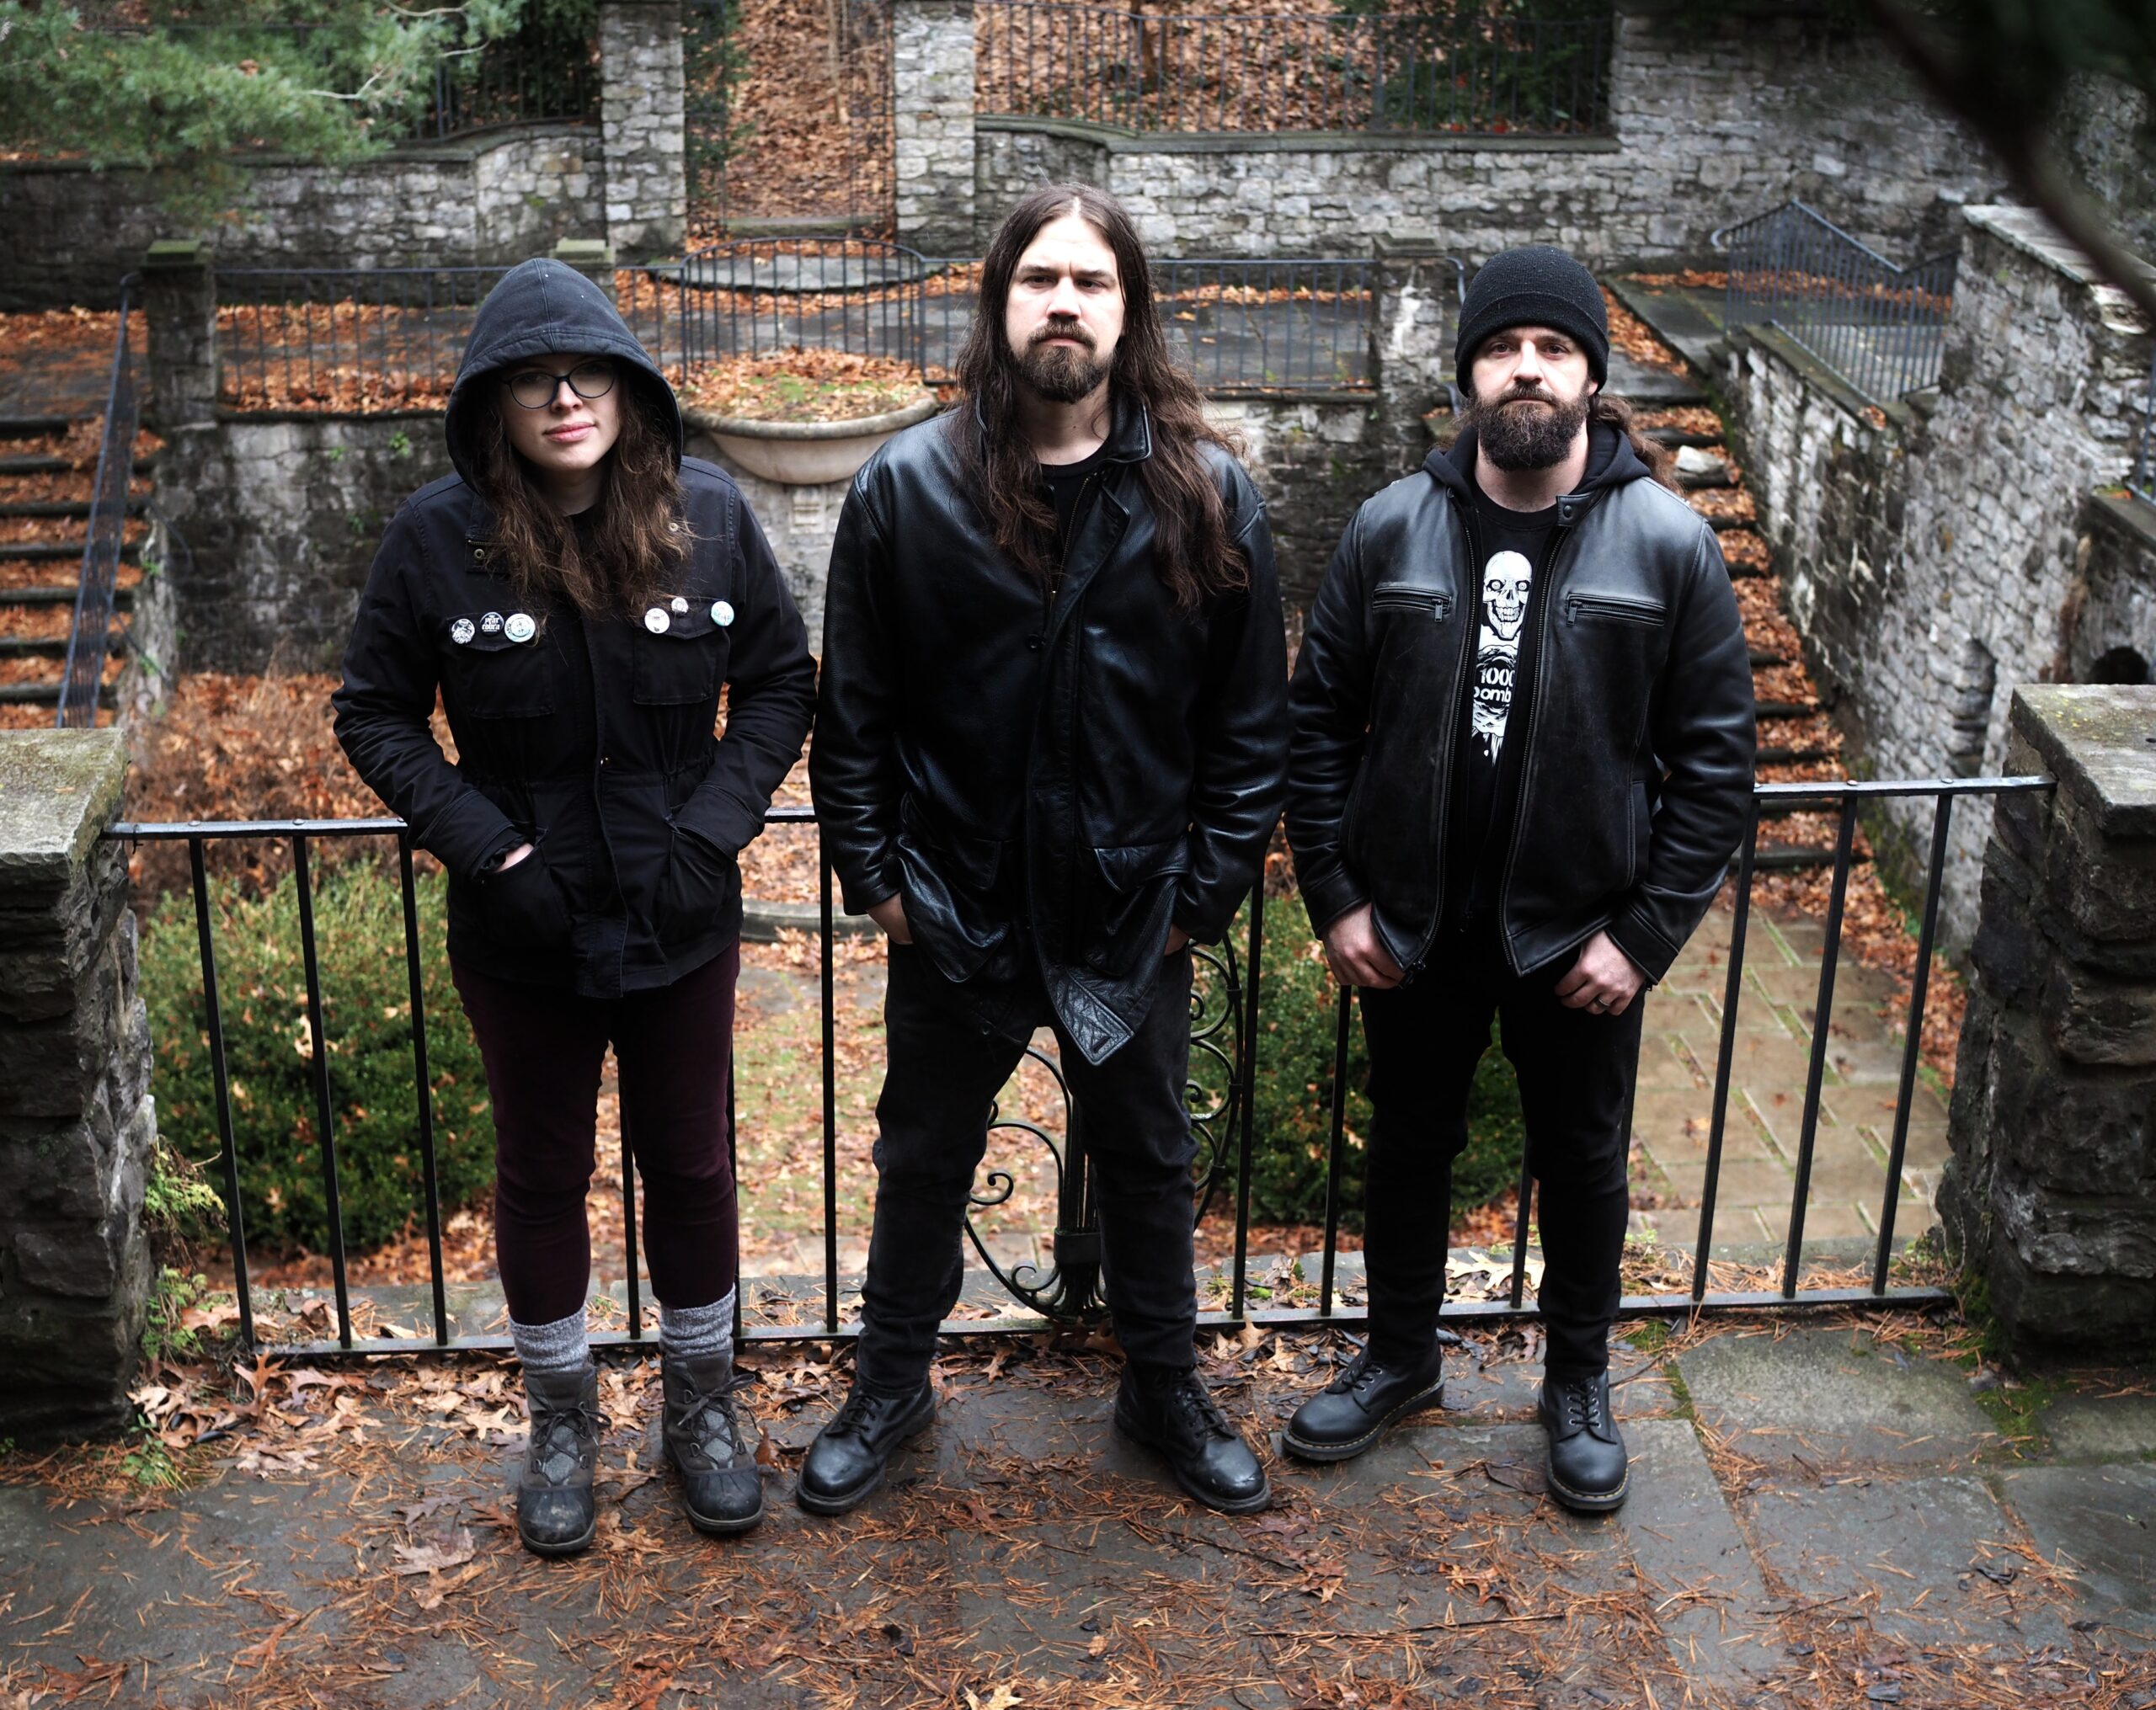 Rochester, New York-based progressive metal band Wandering Oak